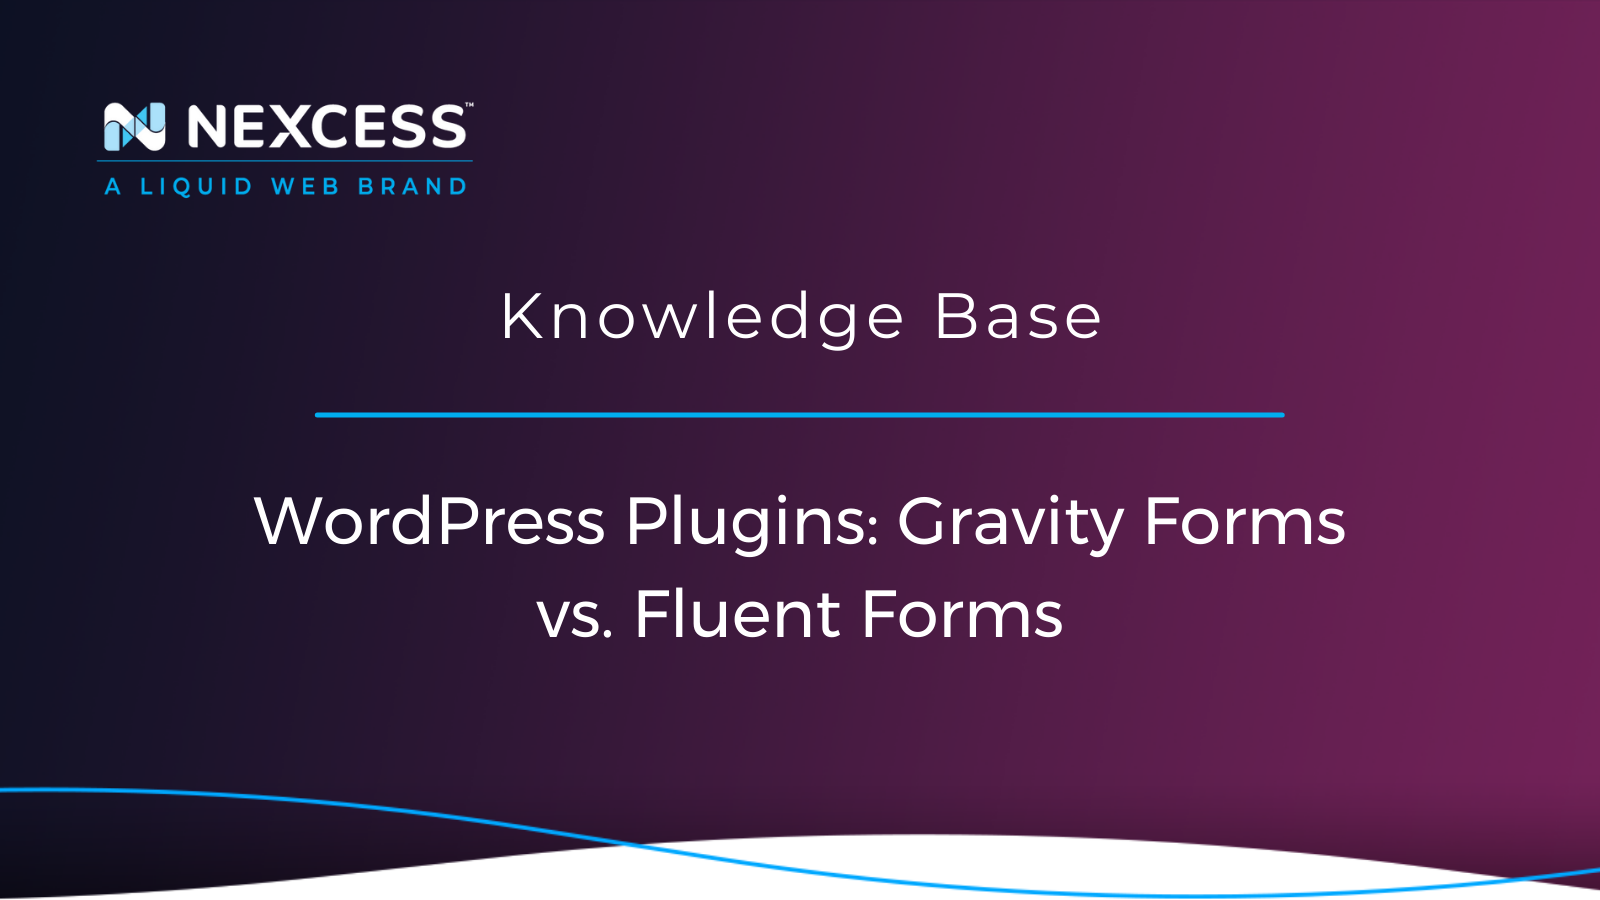 WordPress Plugins: Gravity Forms vs. Fluent Forms